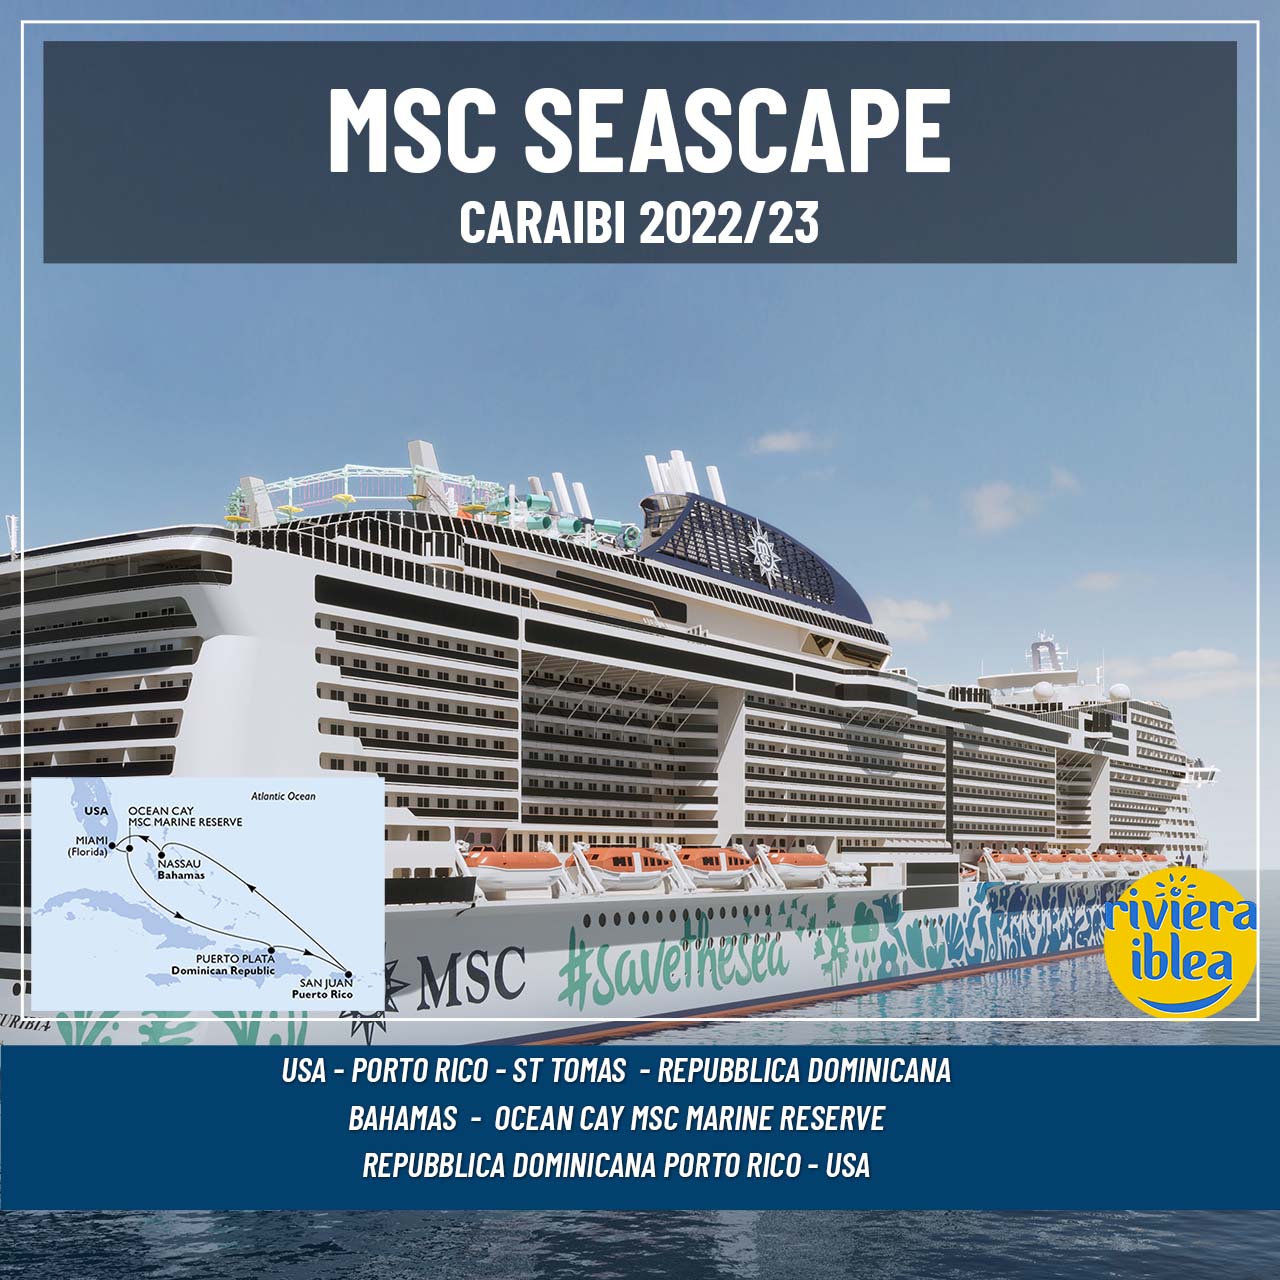 MSC SEASCAPE - CARAIBI